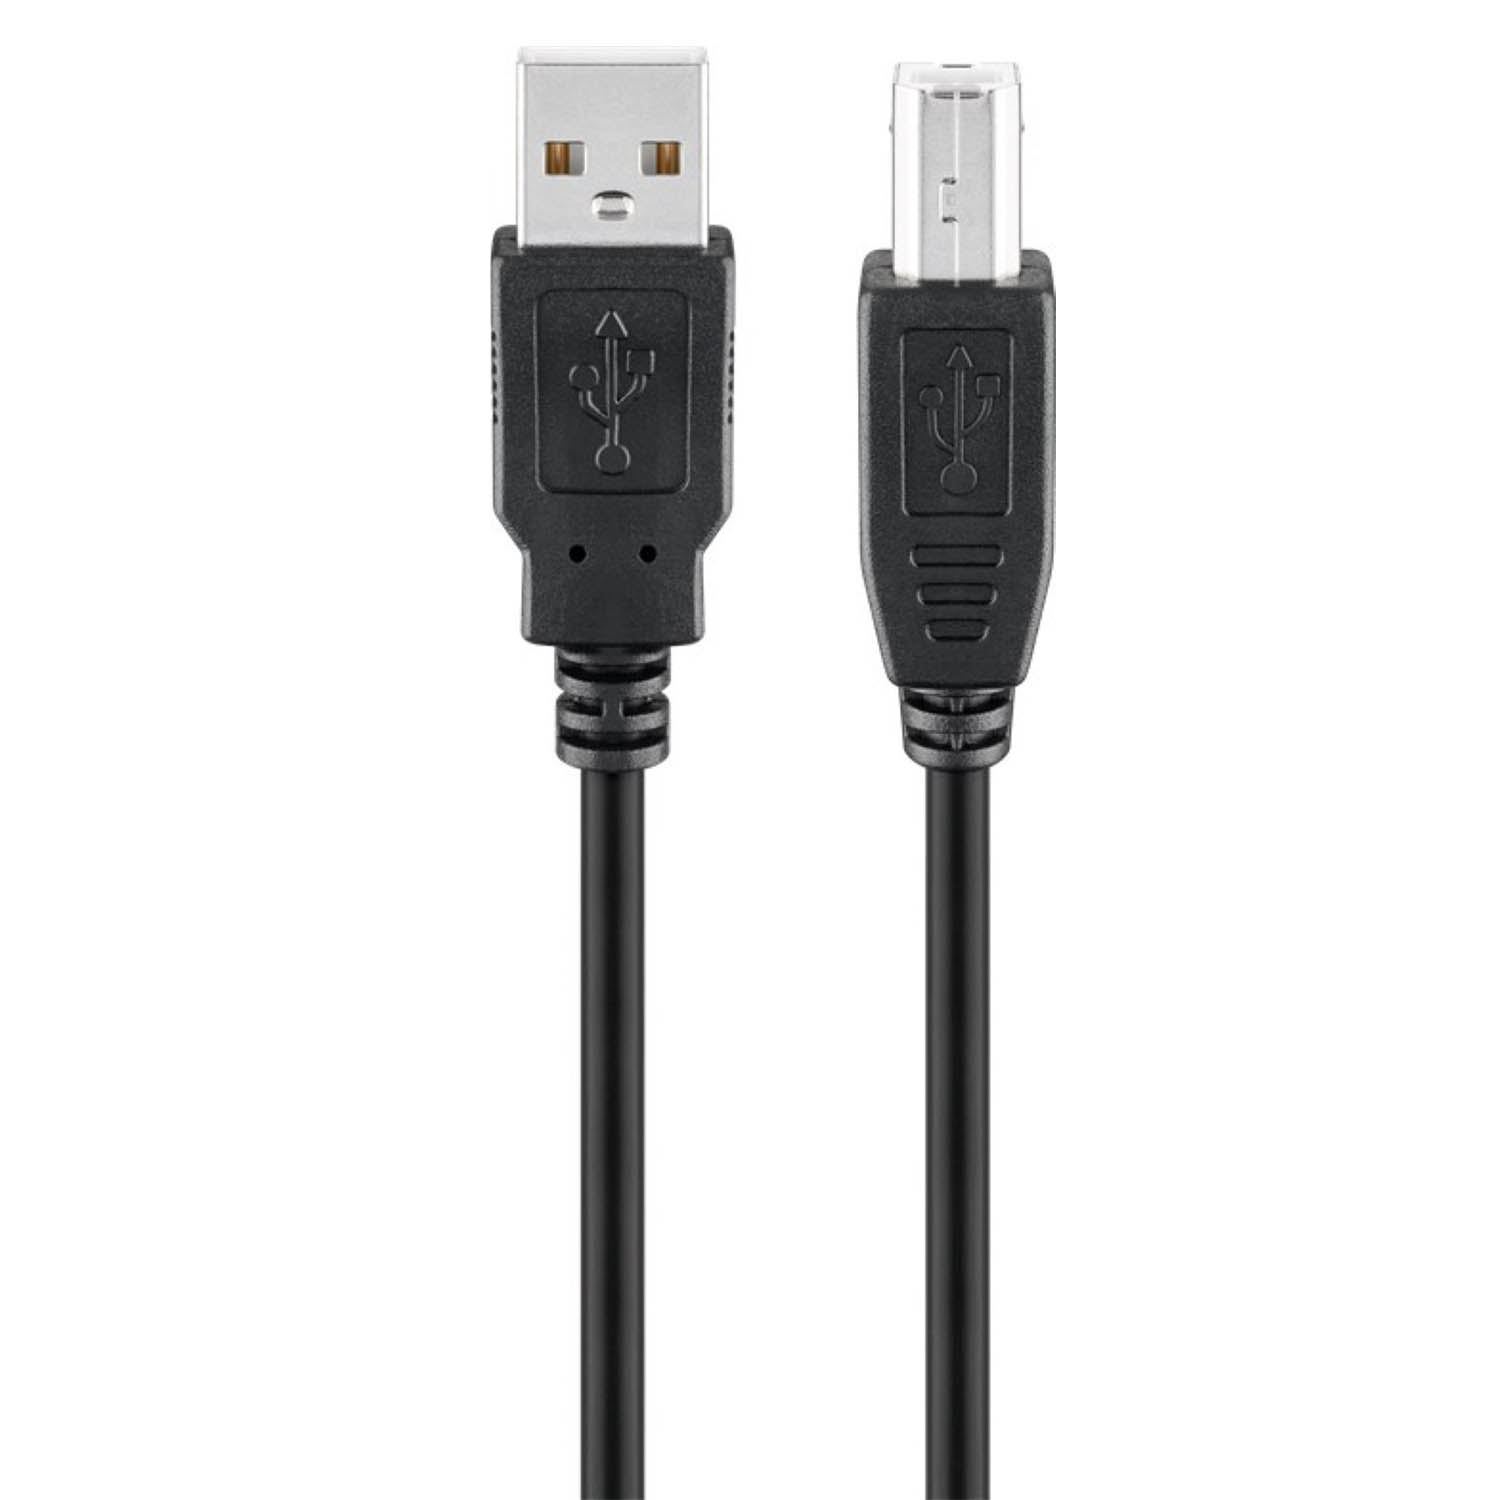 GOOBAY USB 2.0 Hi-Speed Kabel USB Kabel, schwarz